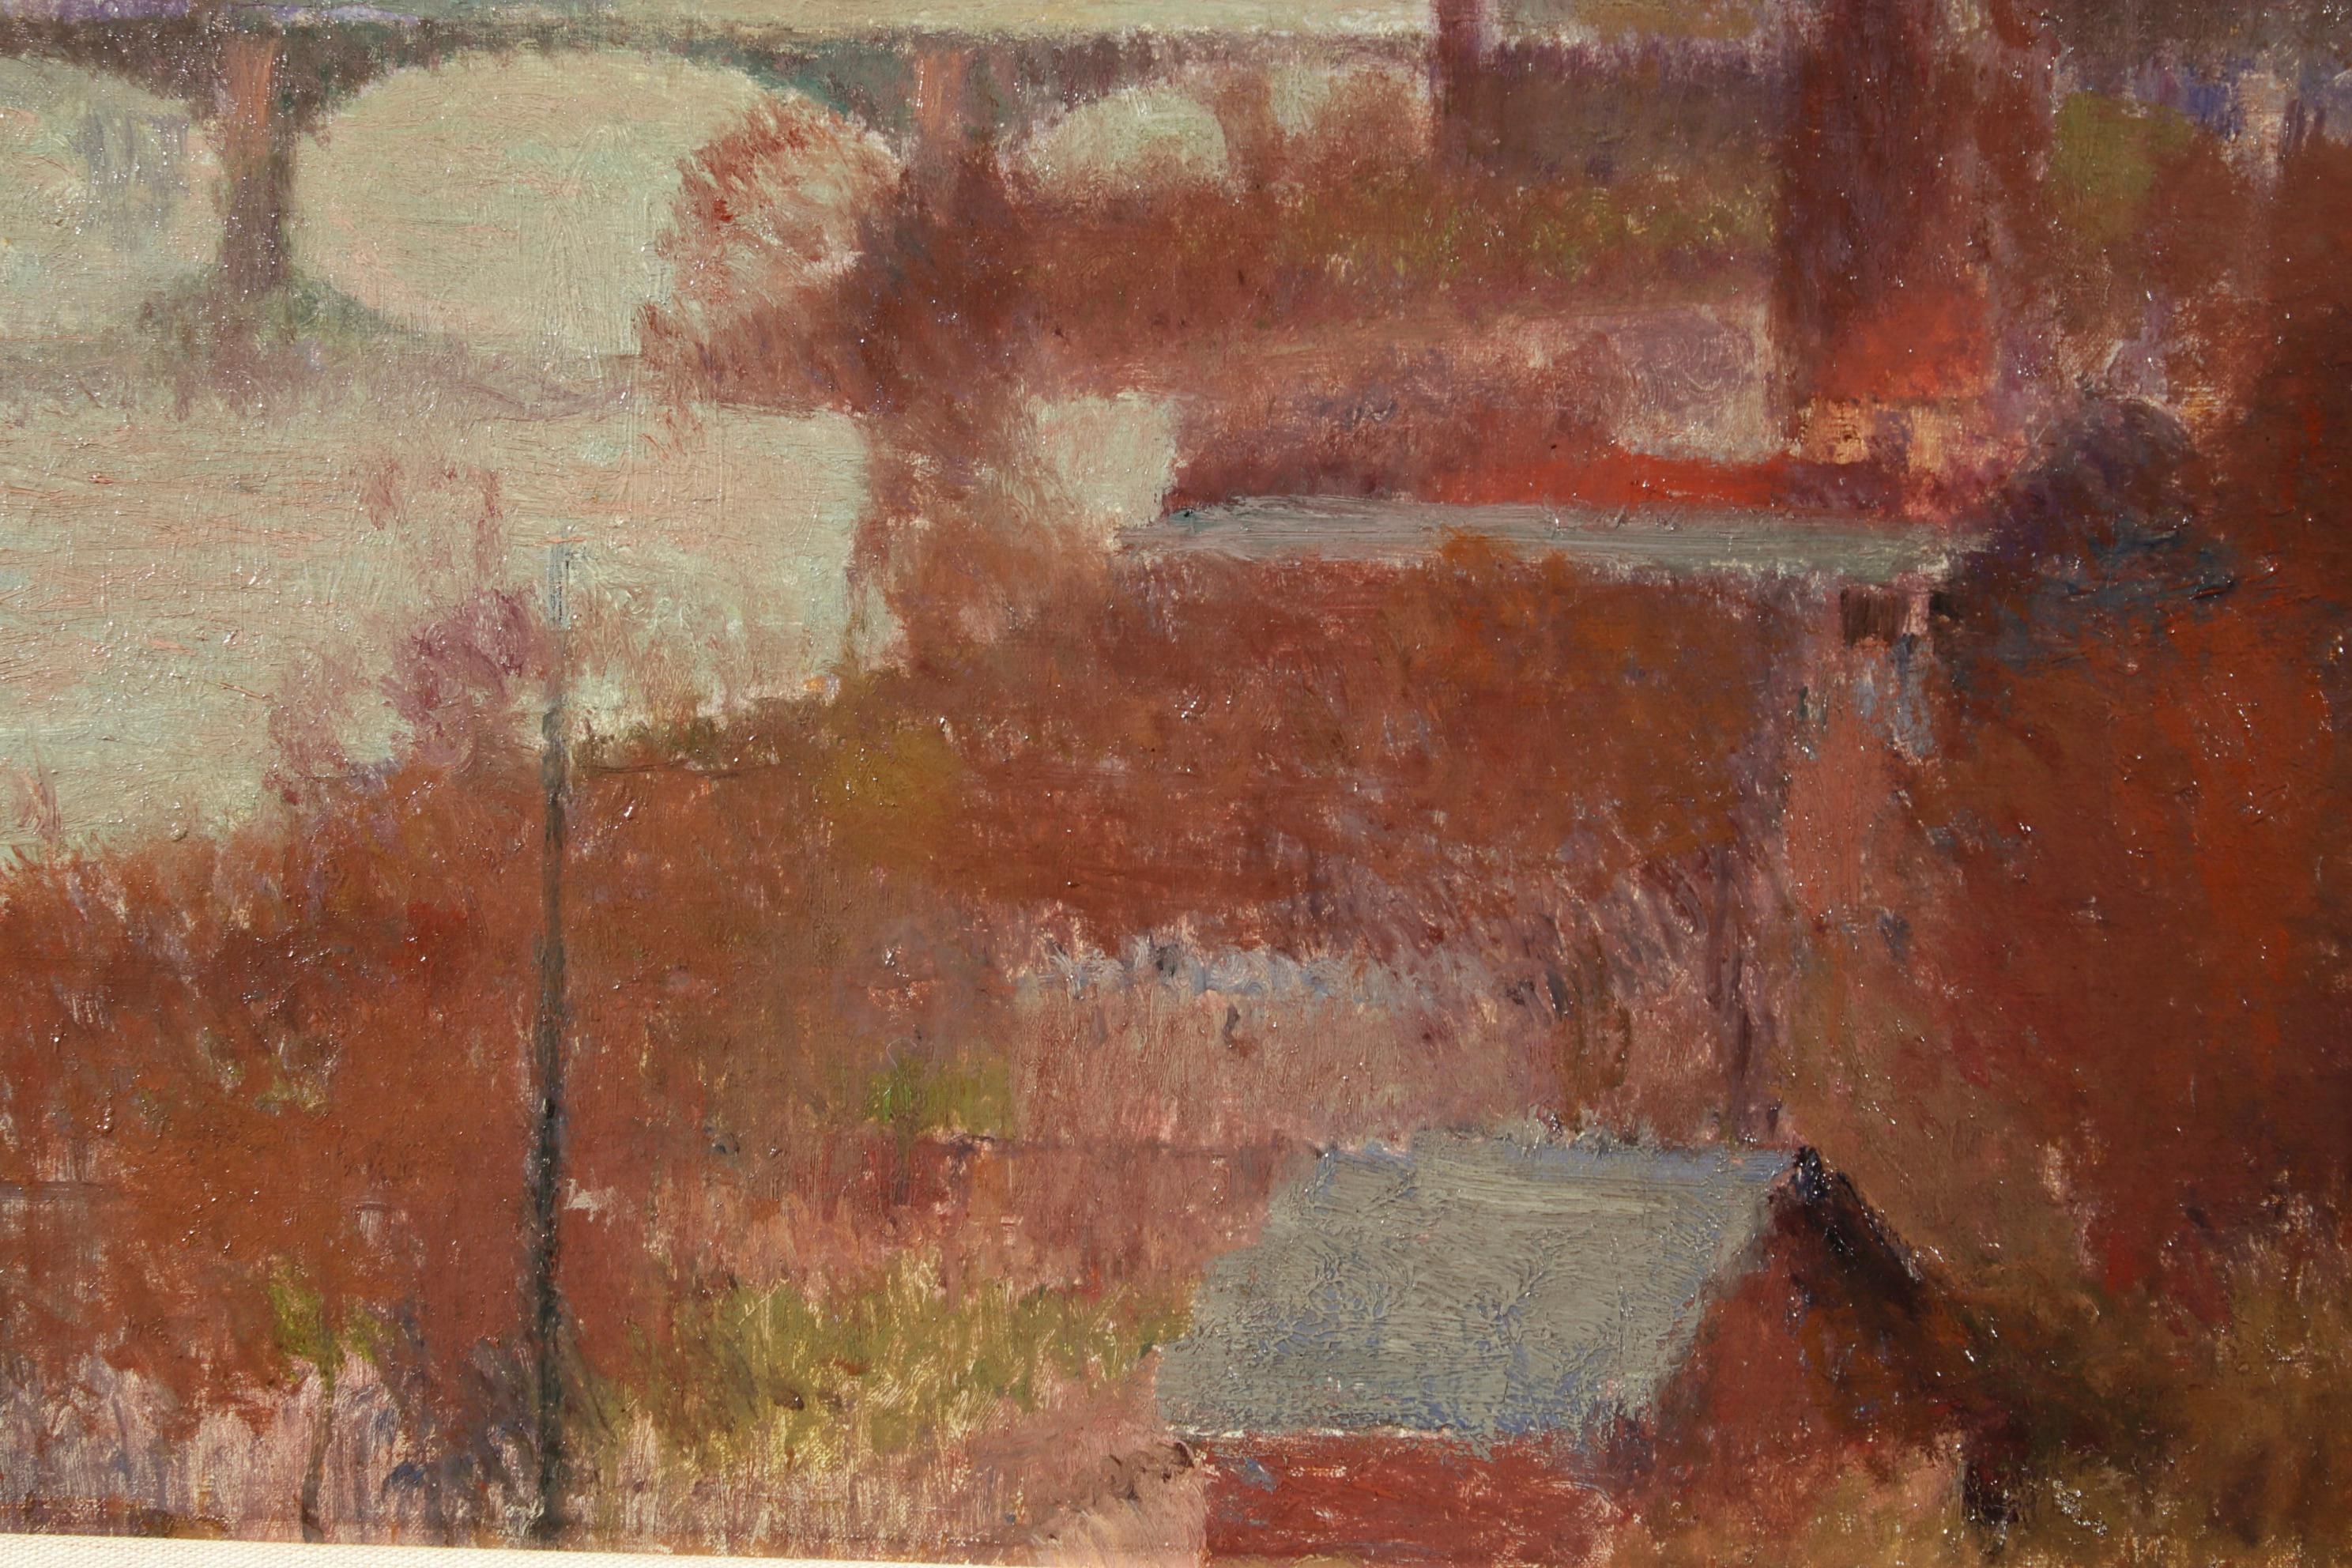 Morning Fog - Rouen - Impressionist Oil, River in Landscape by Joseph Delattre 4